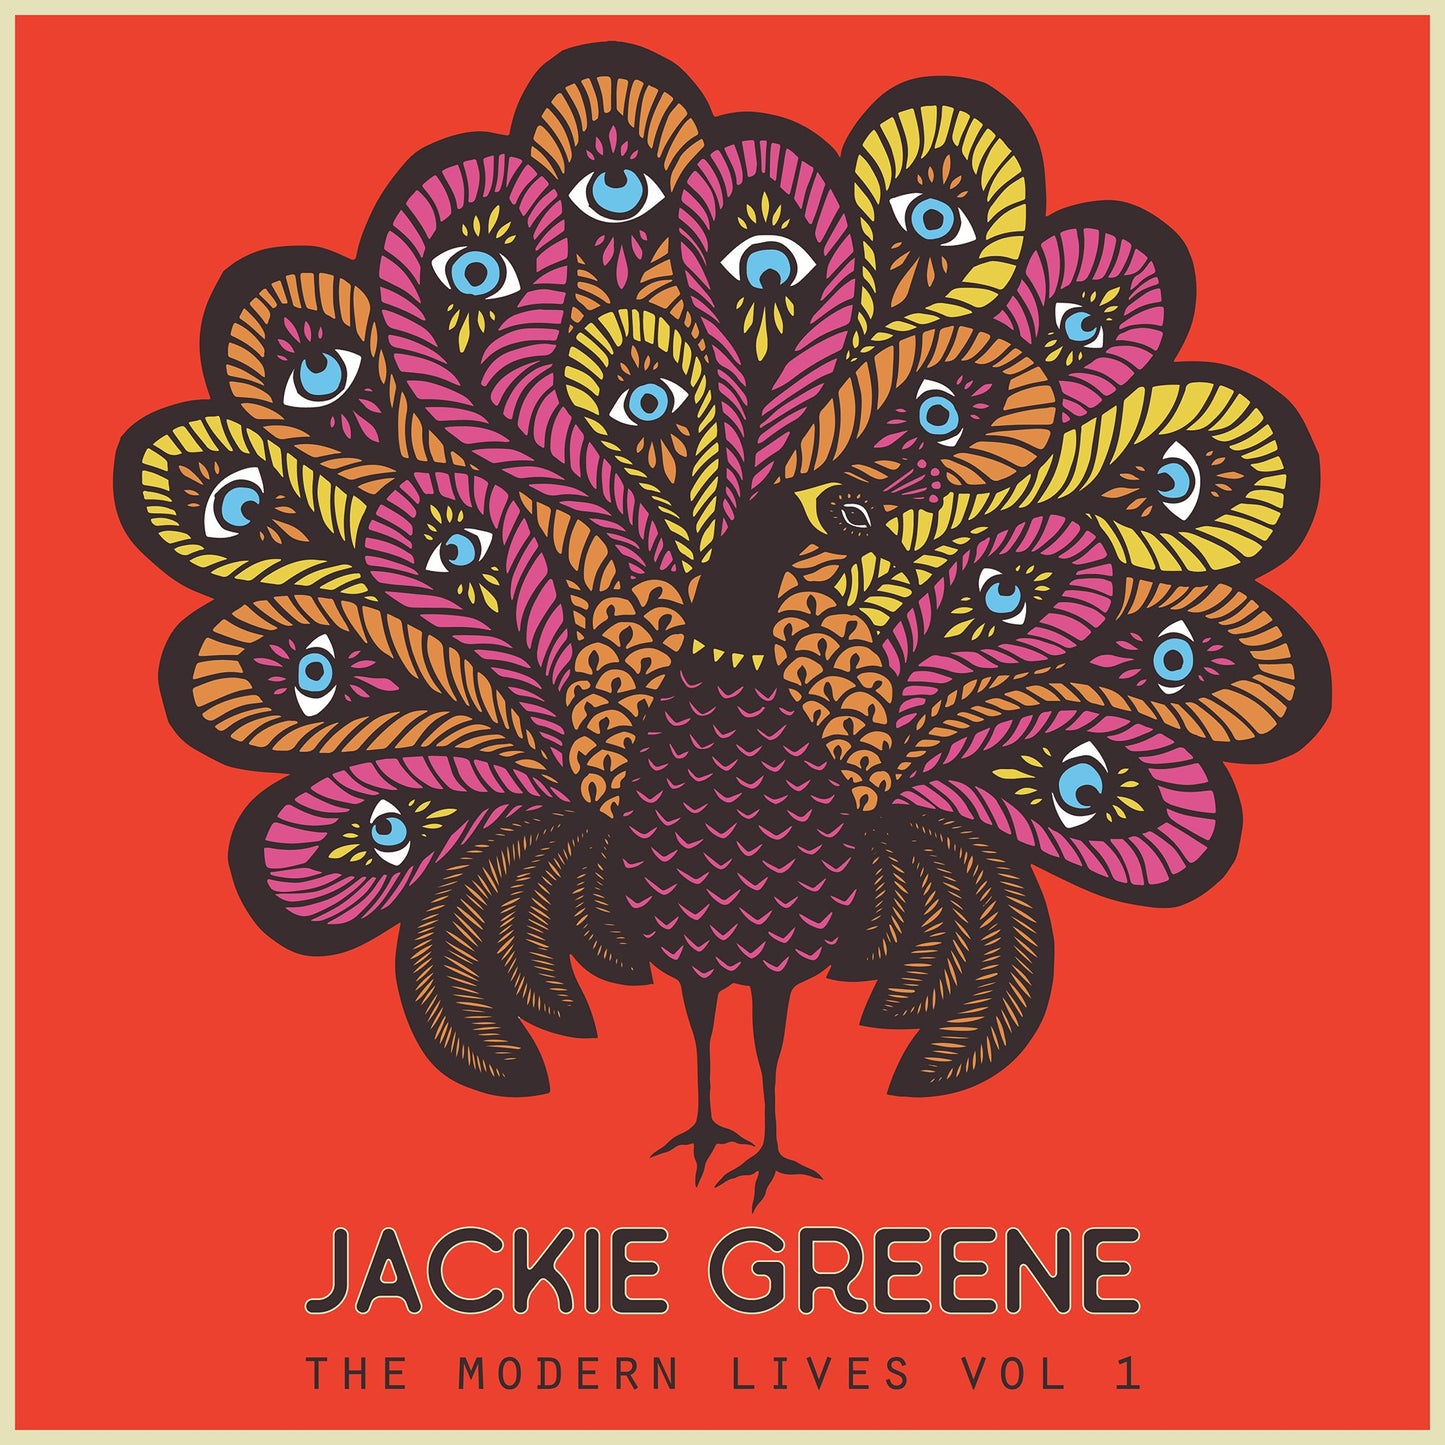 Jackie Greene The Modern Lives Vol. 1 CD Album Cover Blue Rose Music